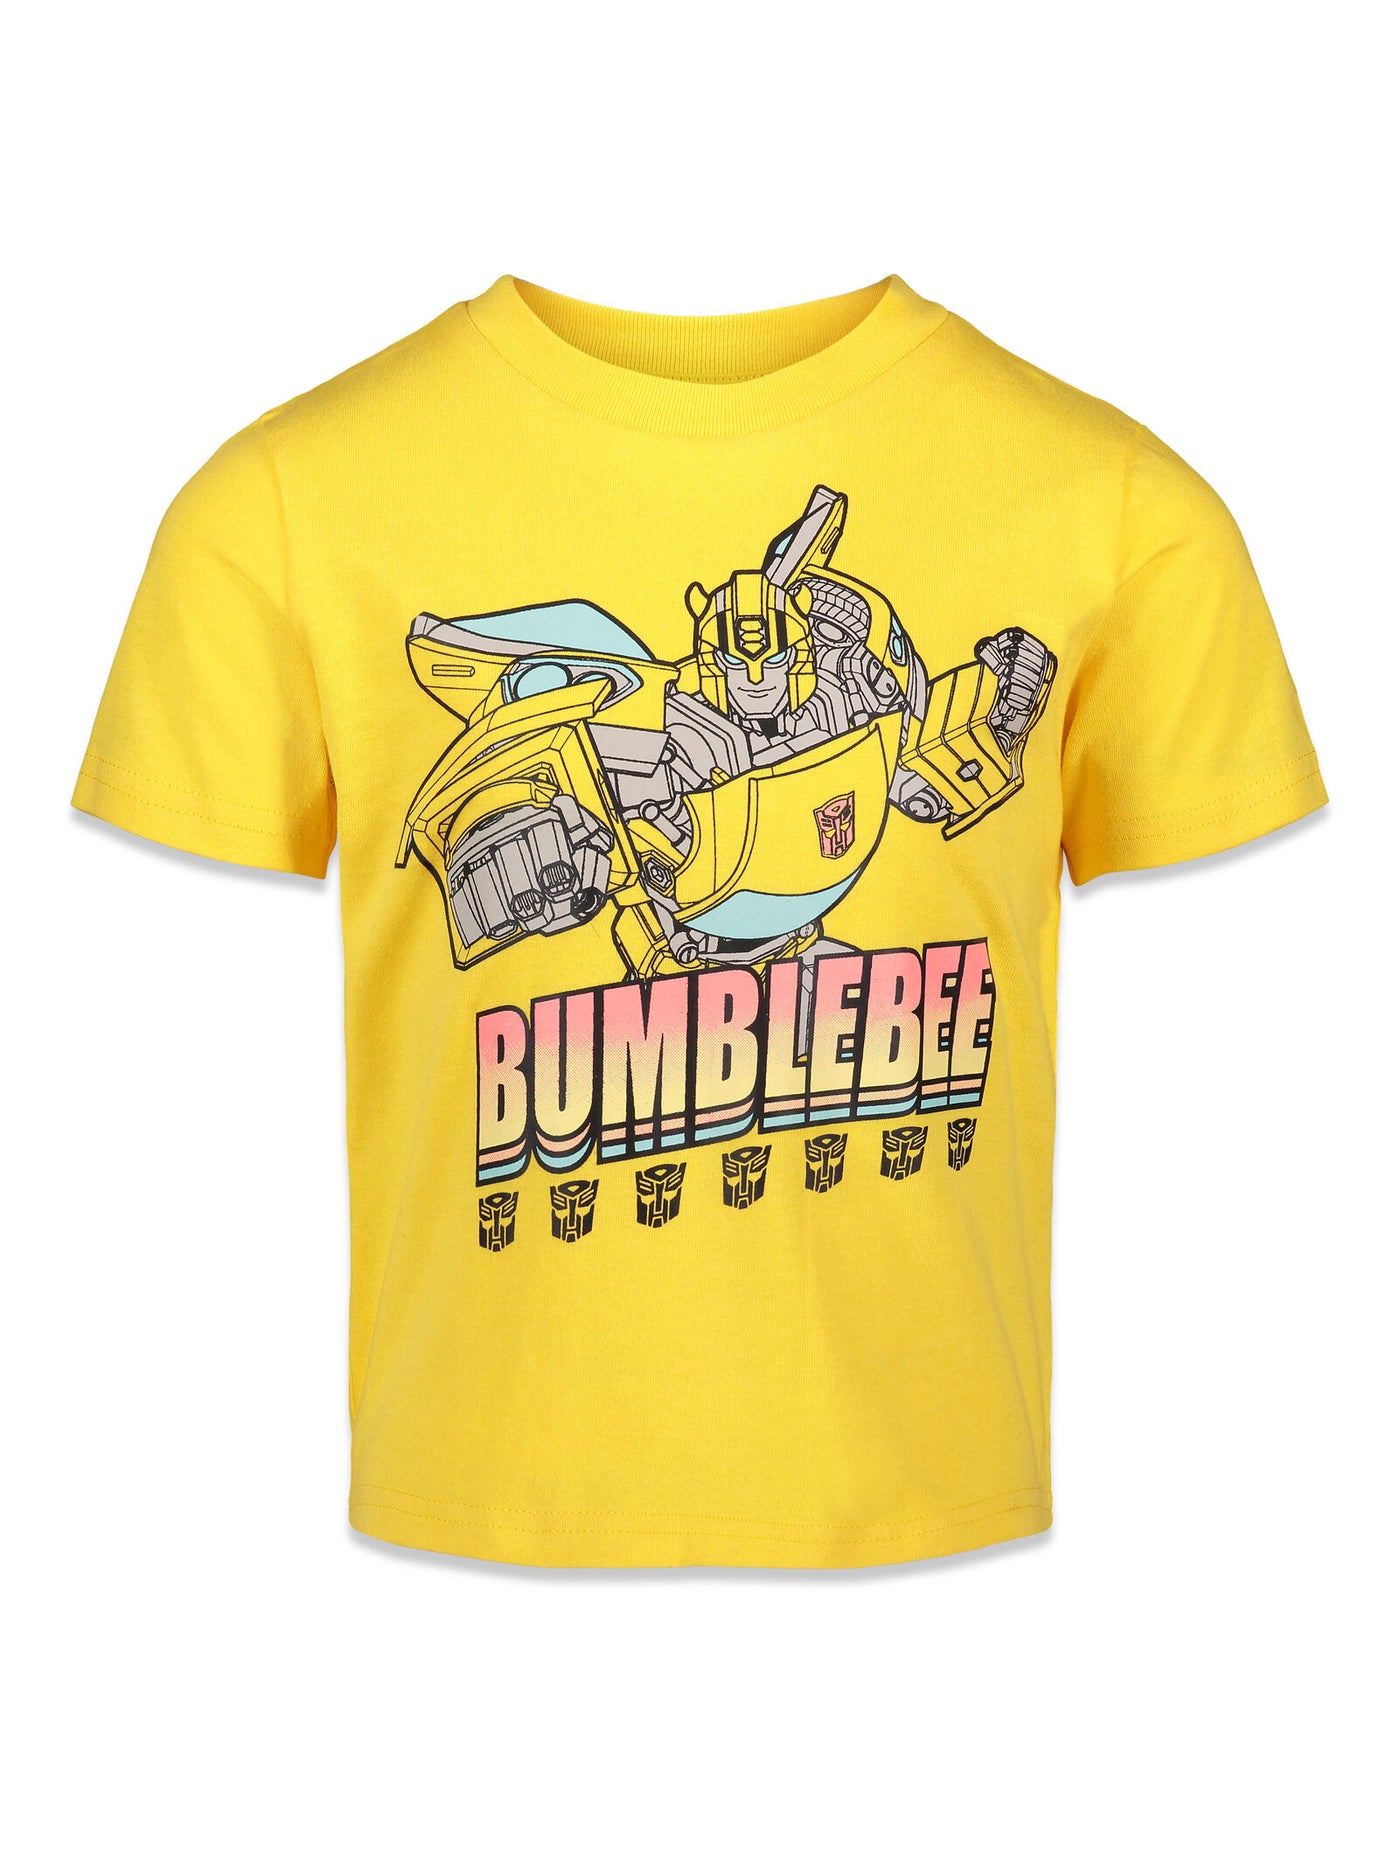 Transformers 3 Pack T-Shirts